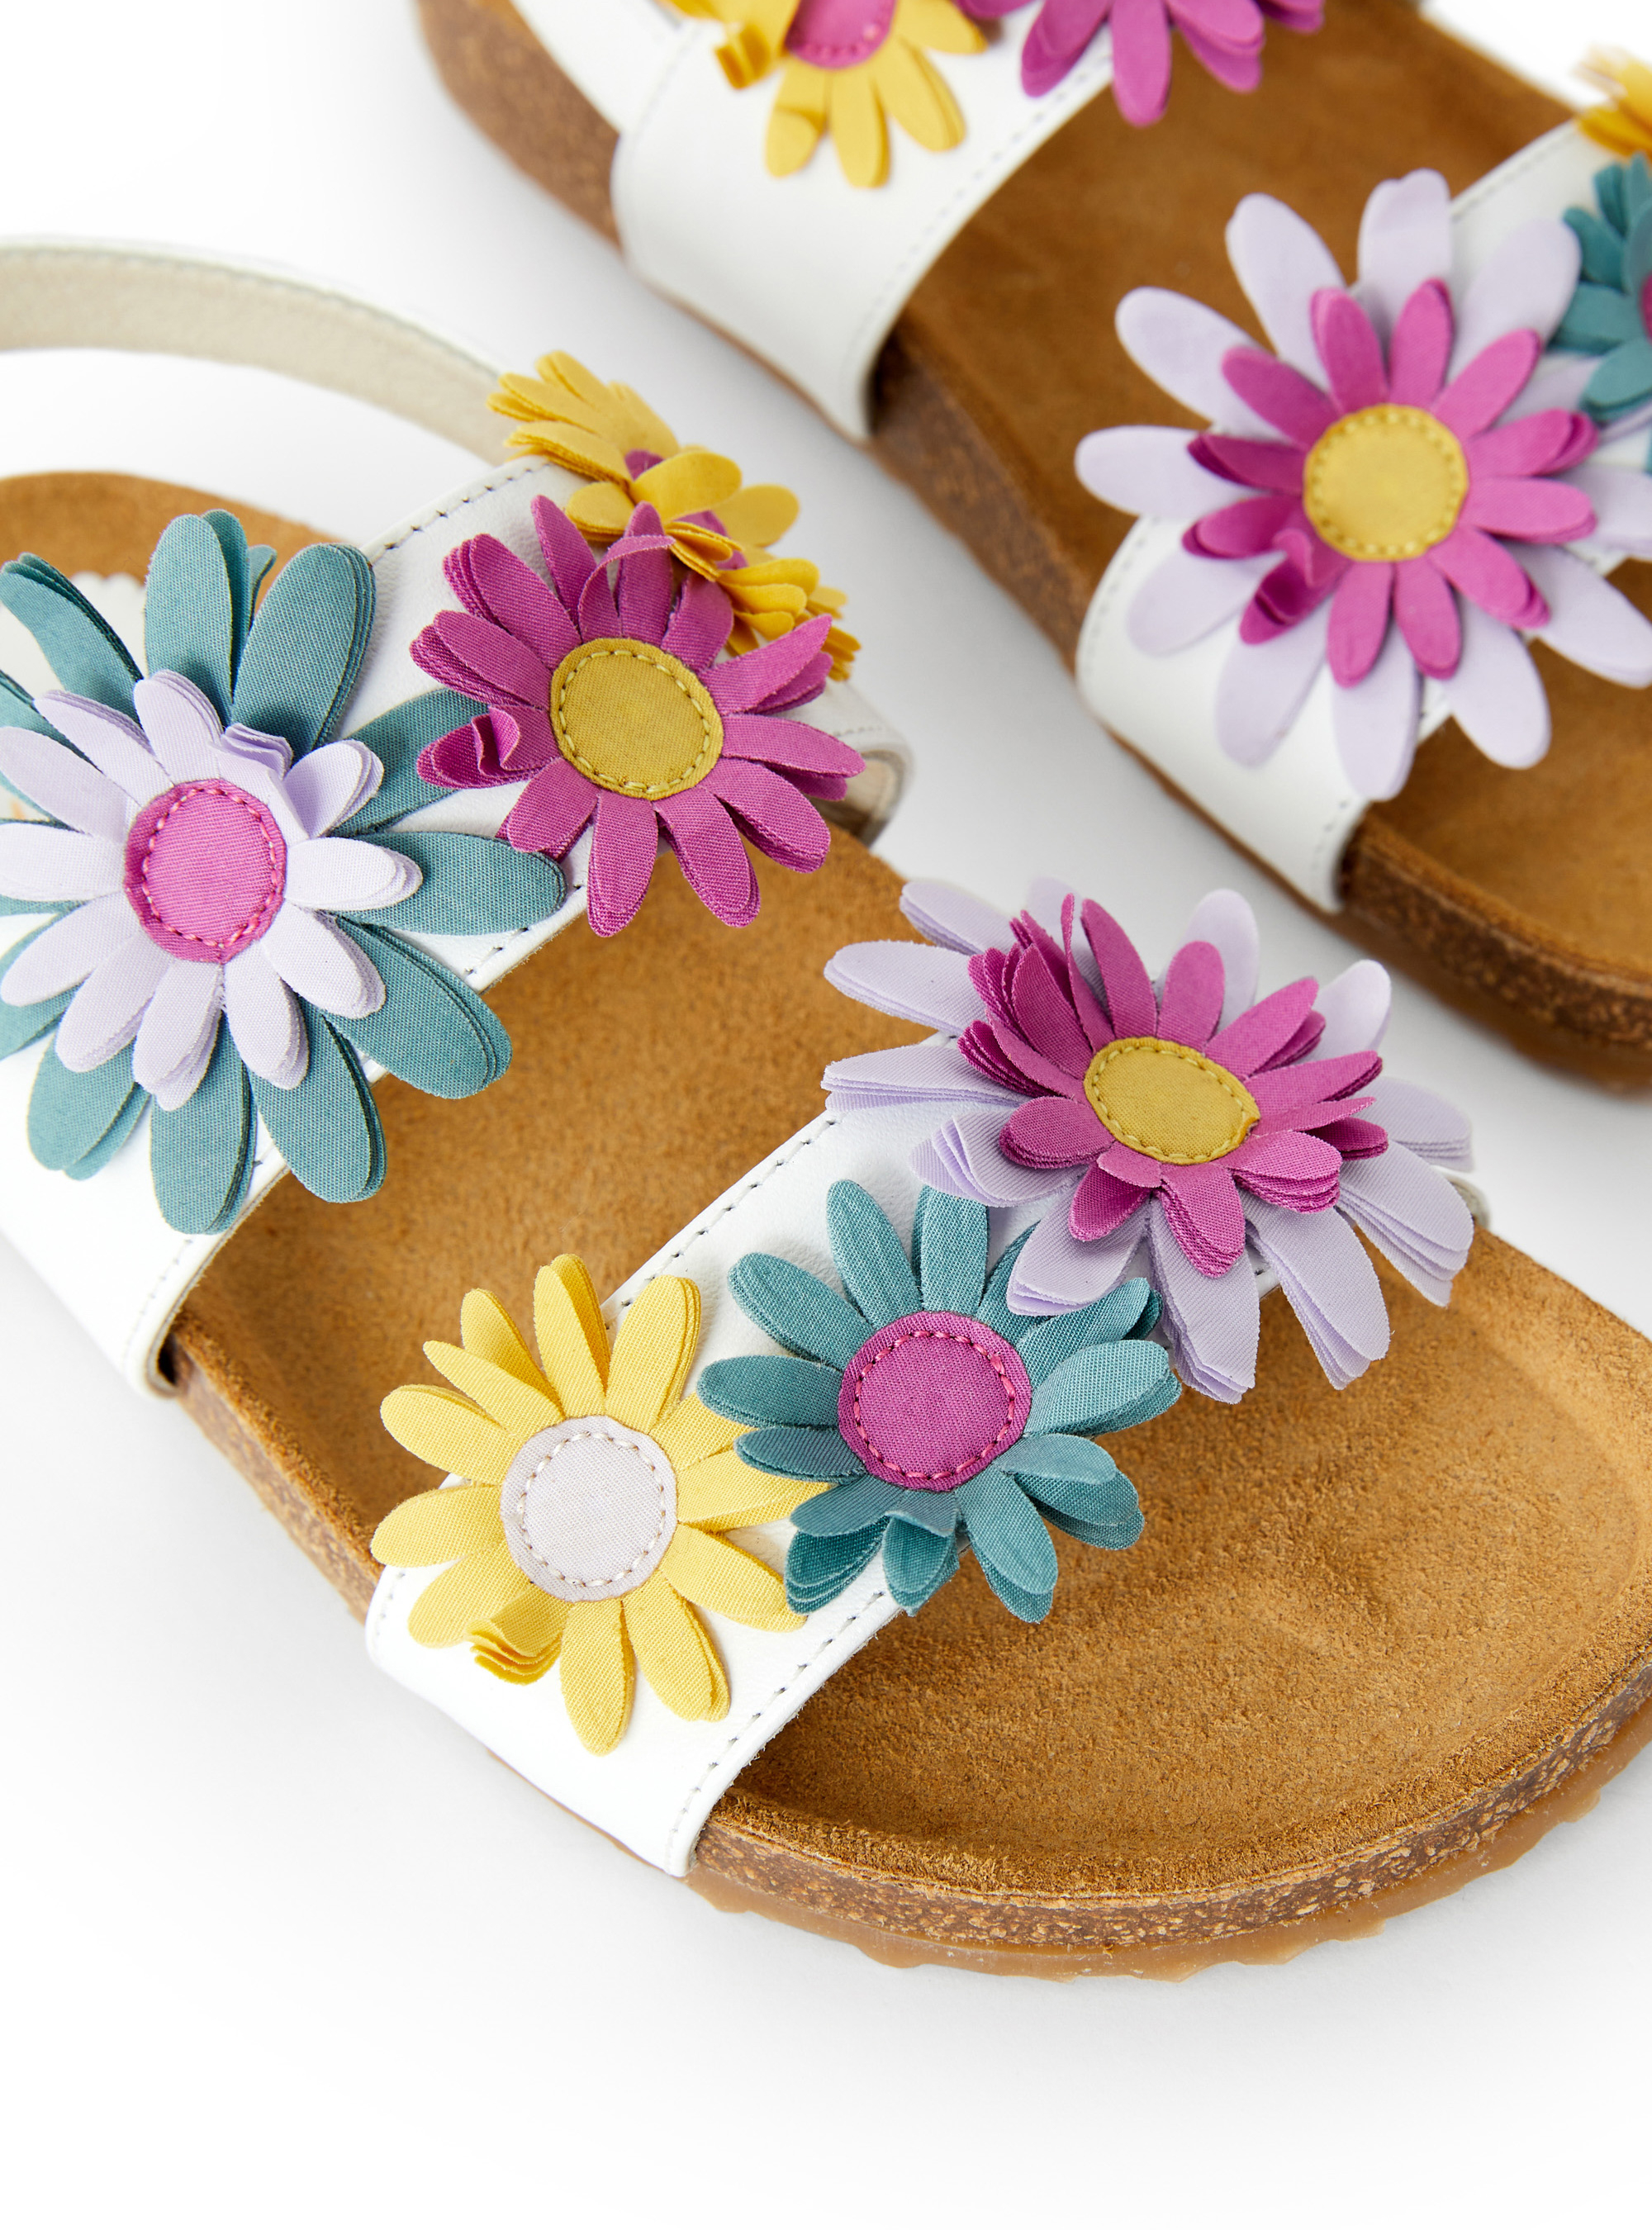 White sandals with multicolour flowers - White | Il Gufo